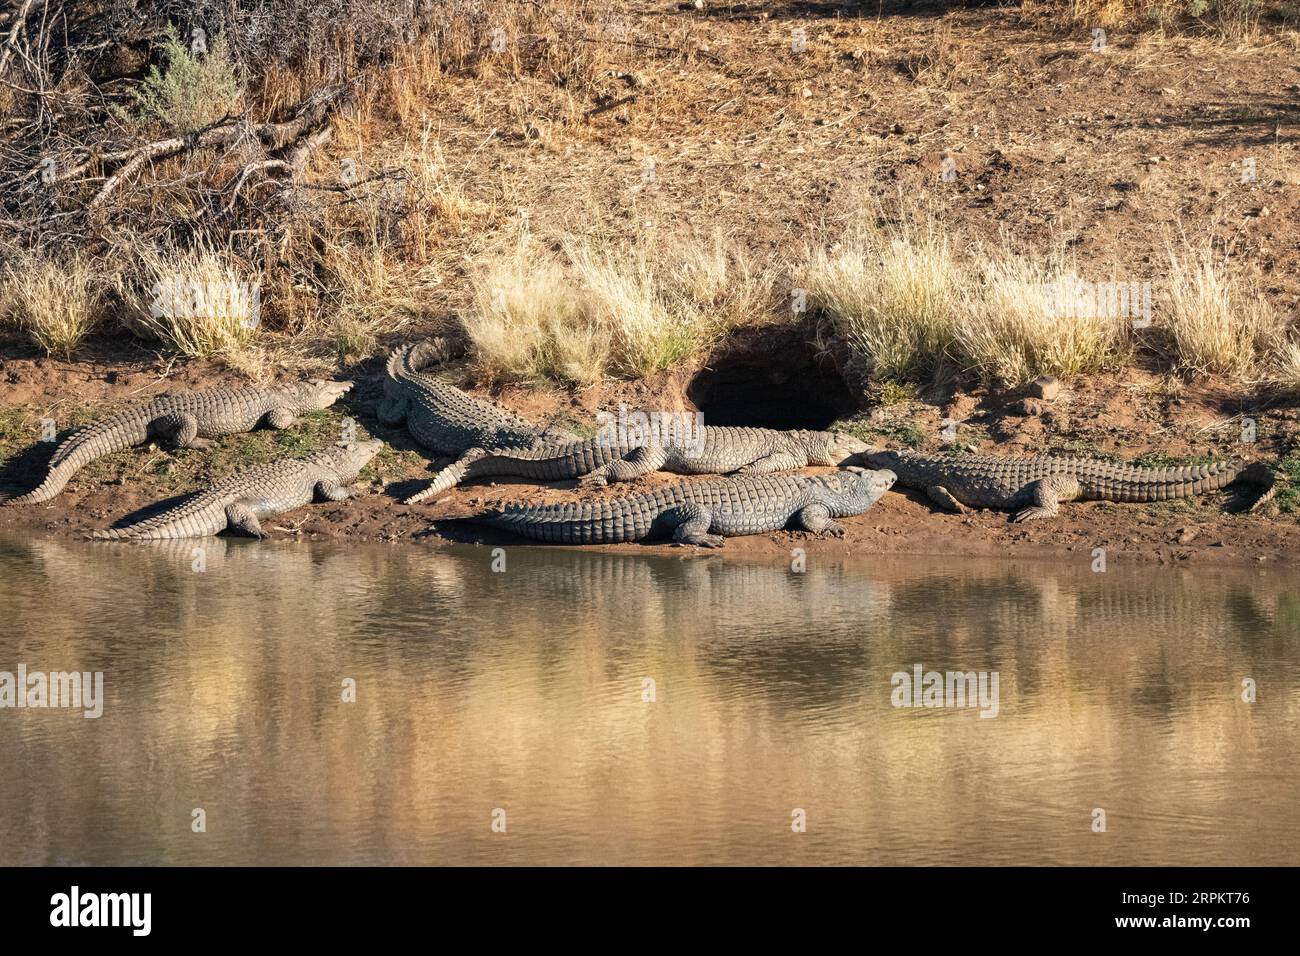 Nile crocodile in Namibia Stock Photo